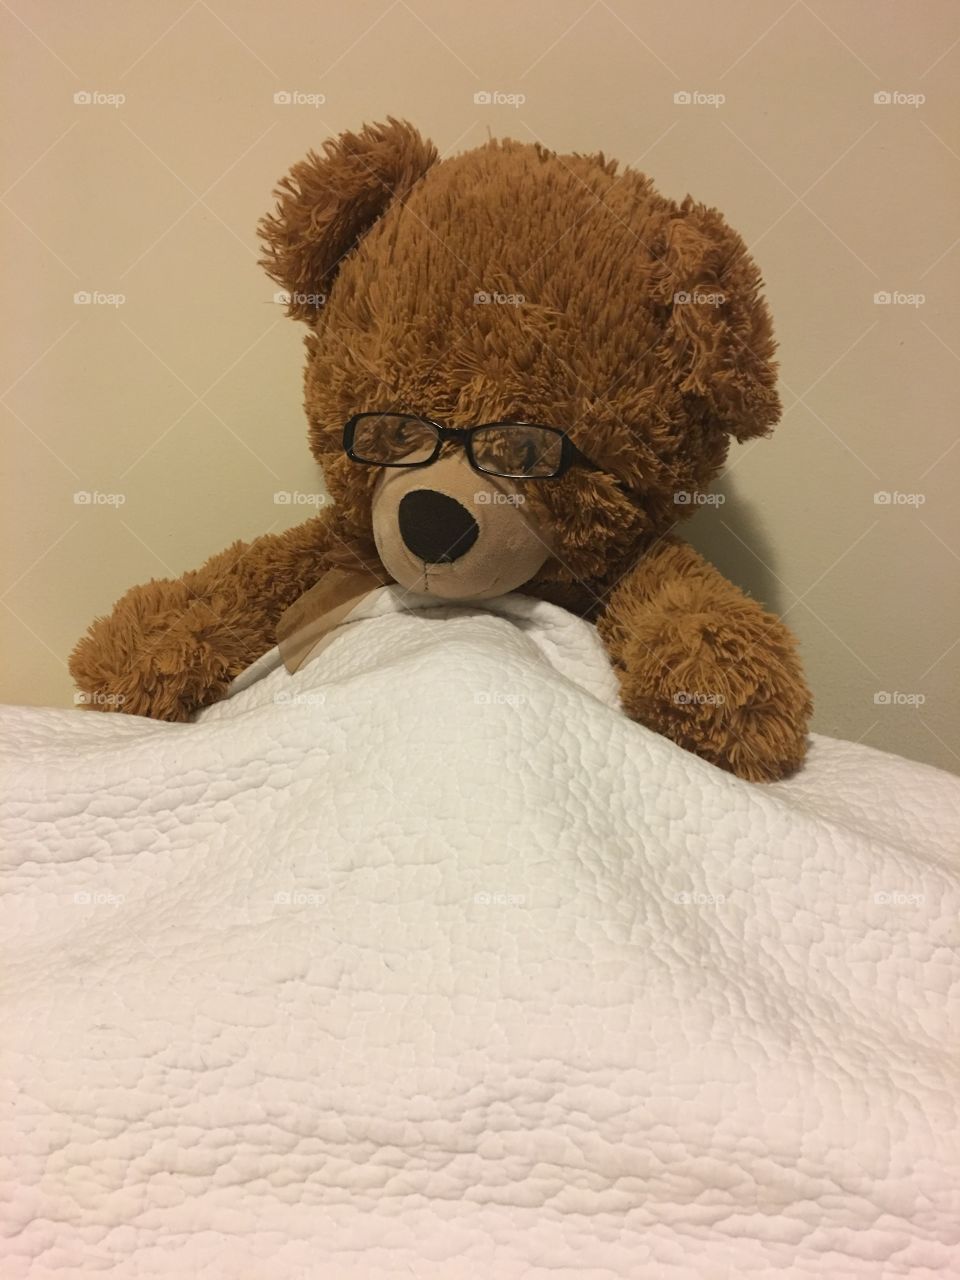 Bernard the bear tucked in bed